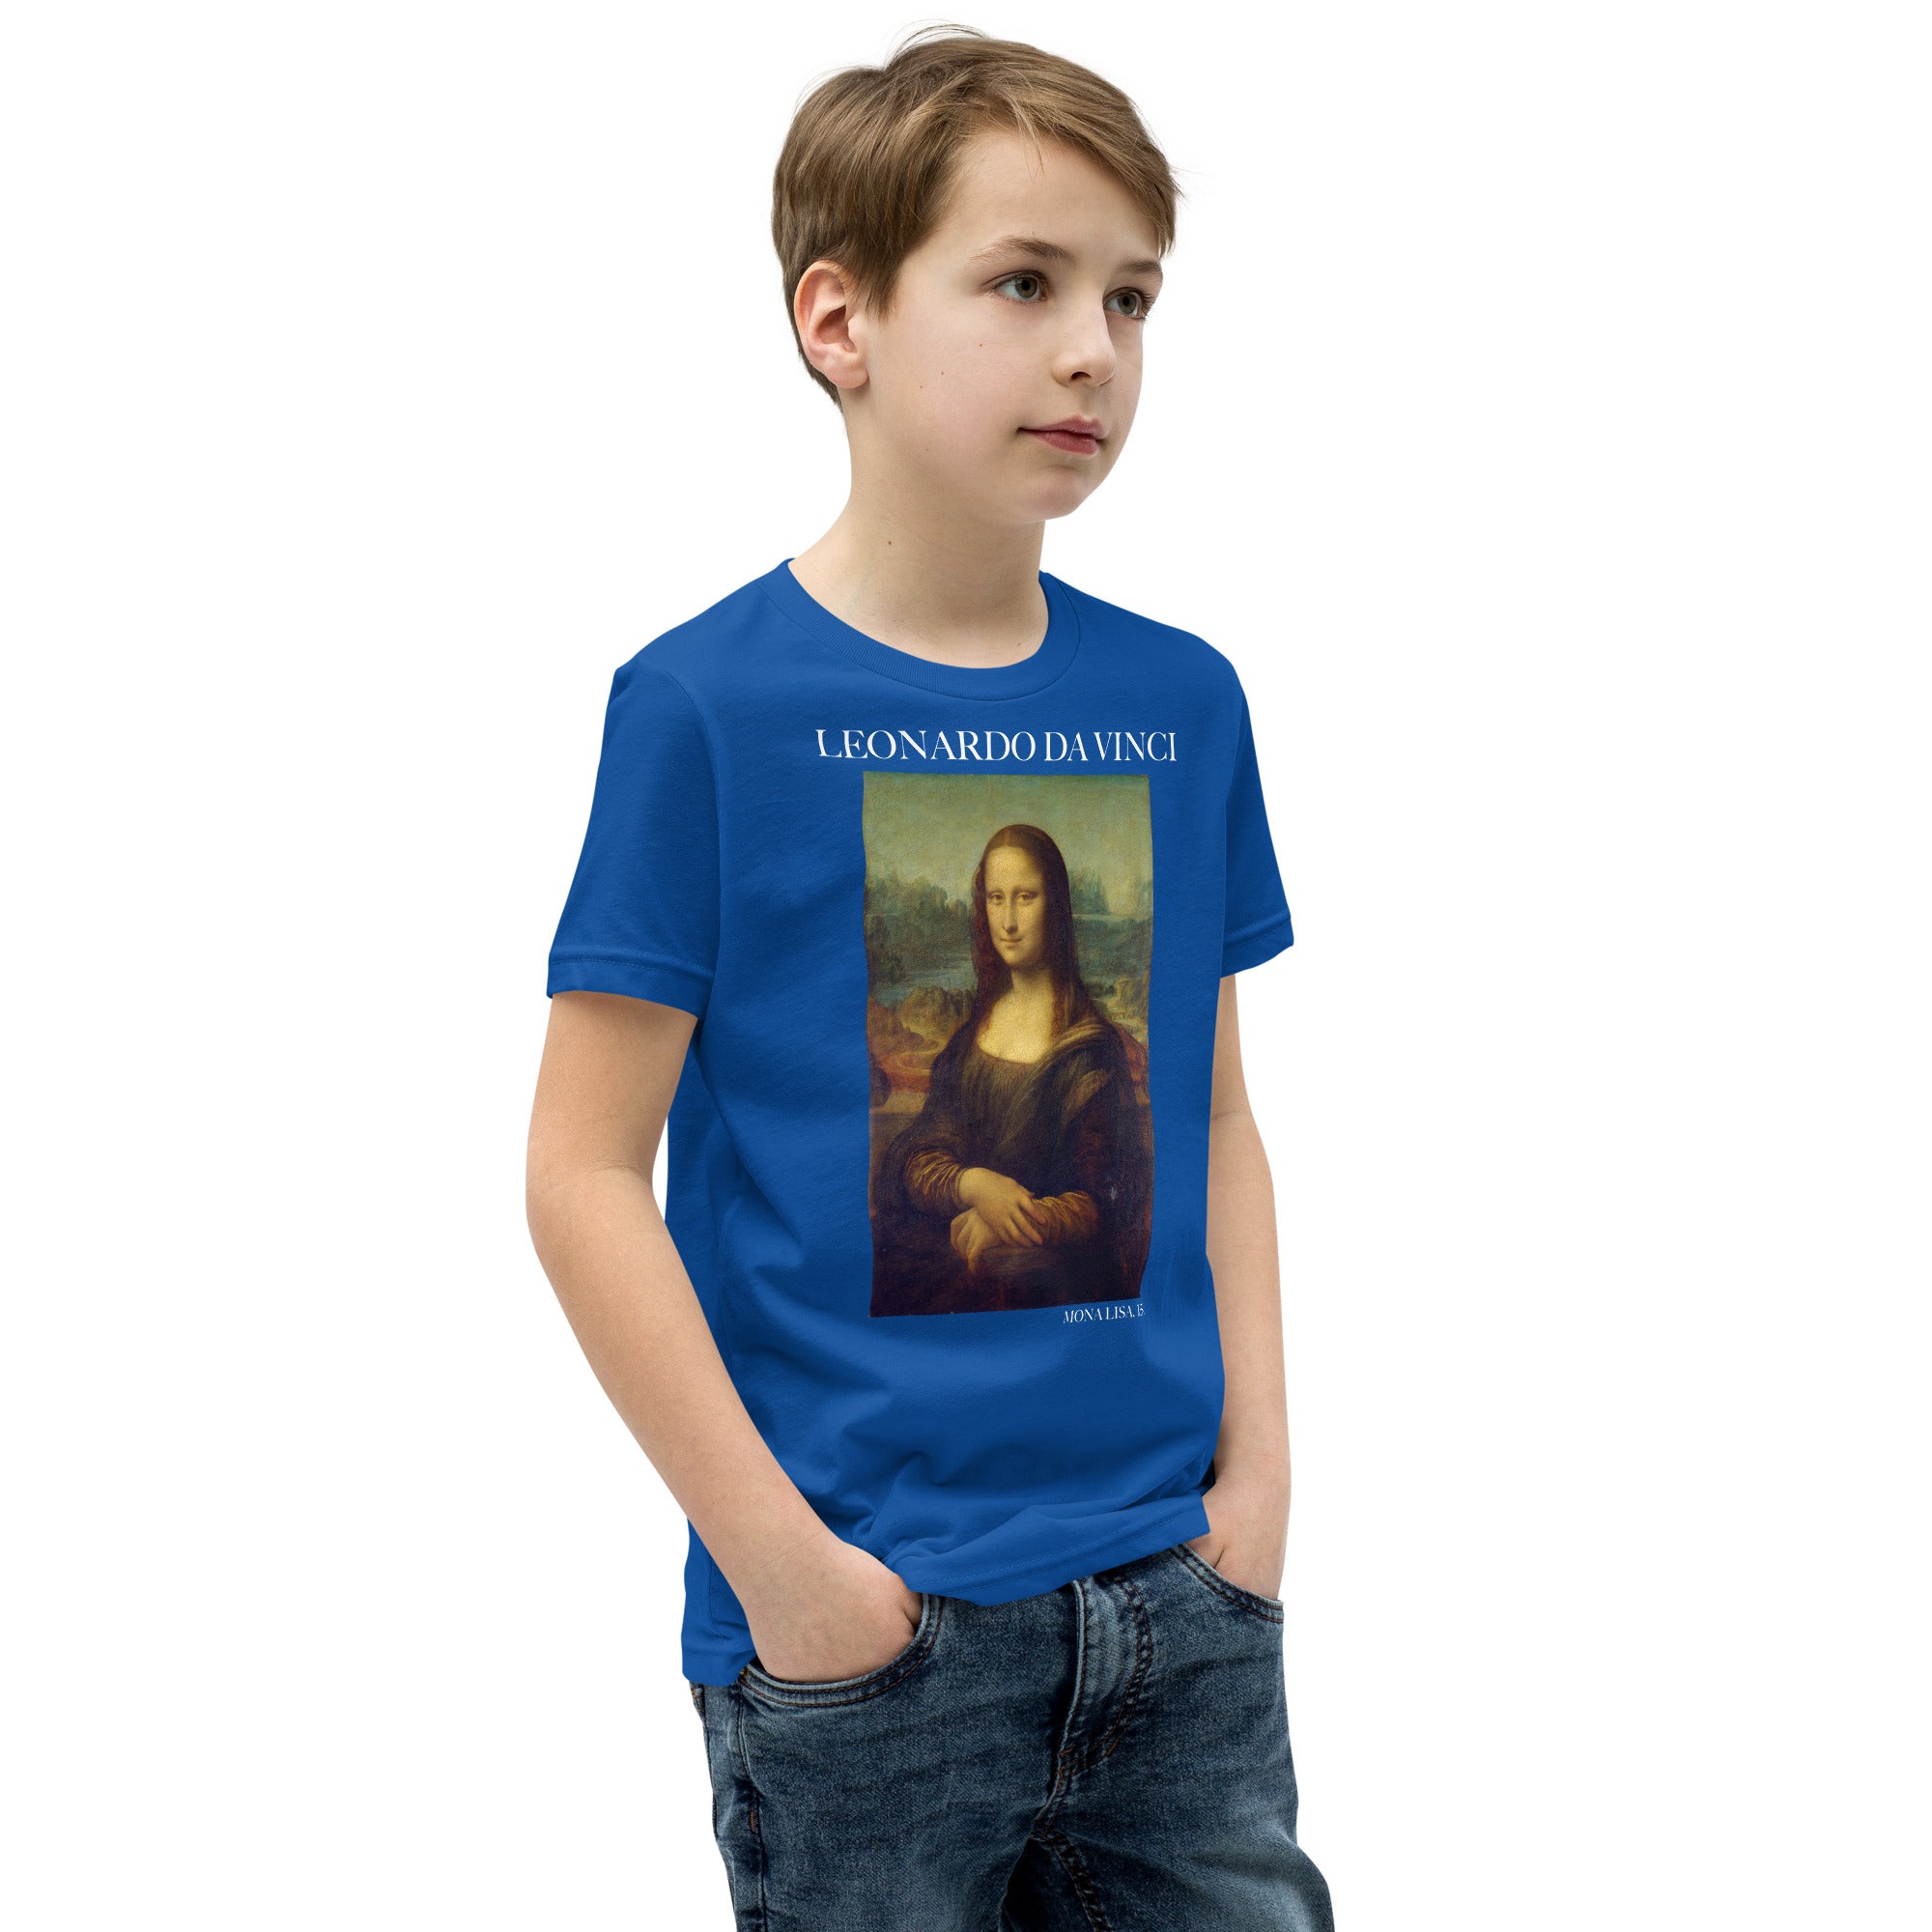 Leonardo da Vinci 'Mona Lisa' Famous Painting Short Sleeve T-Shirt | Premium Youth Art Tee